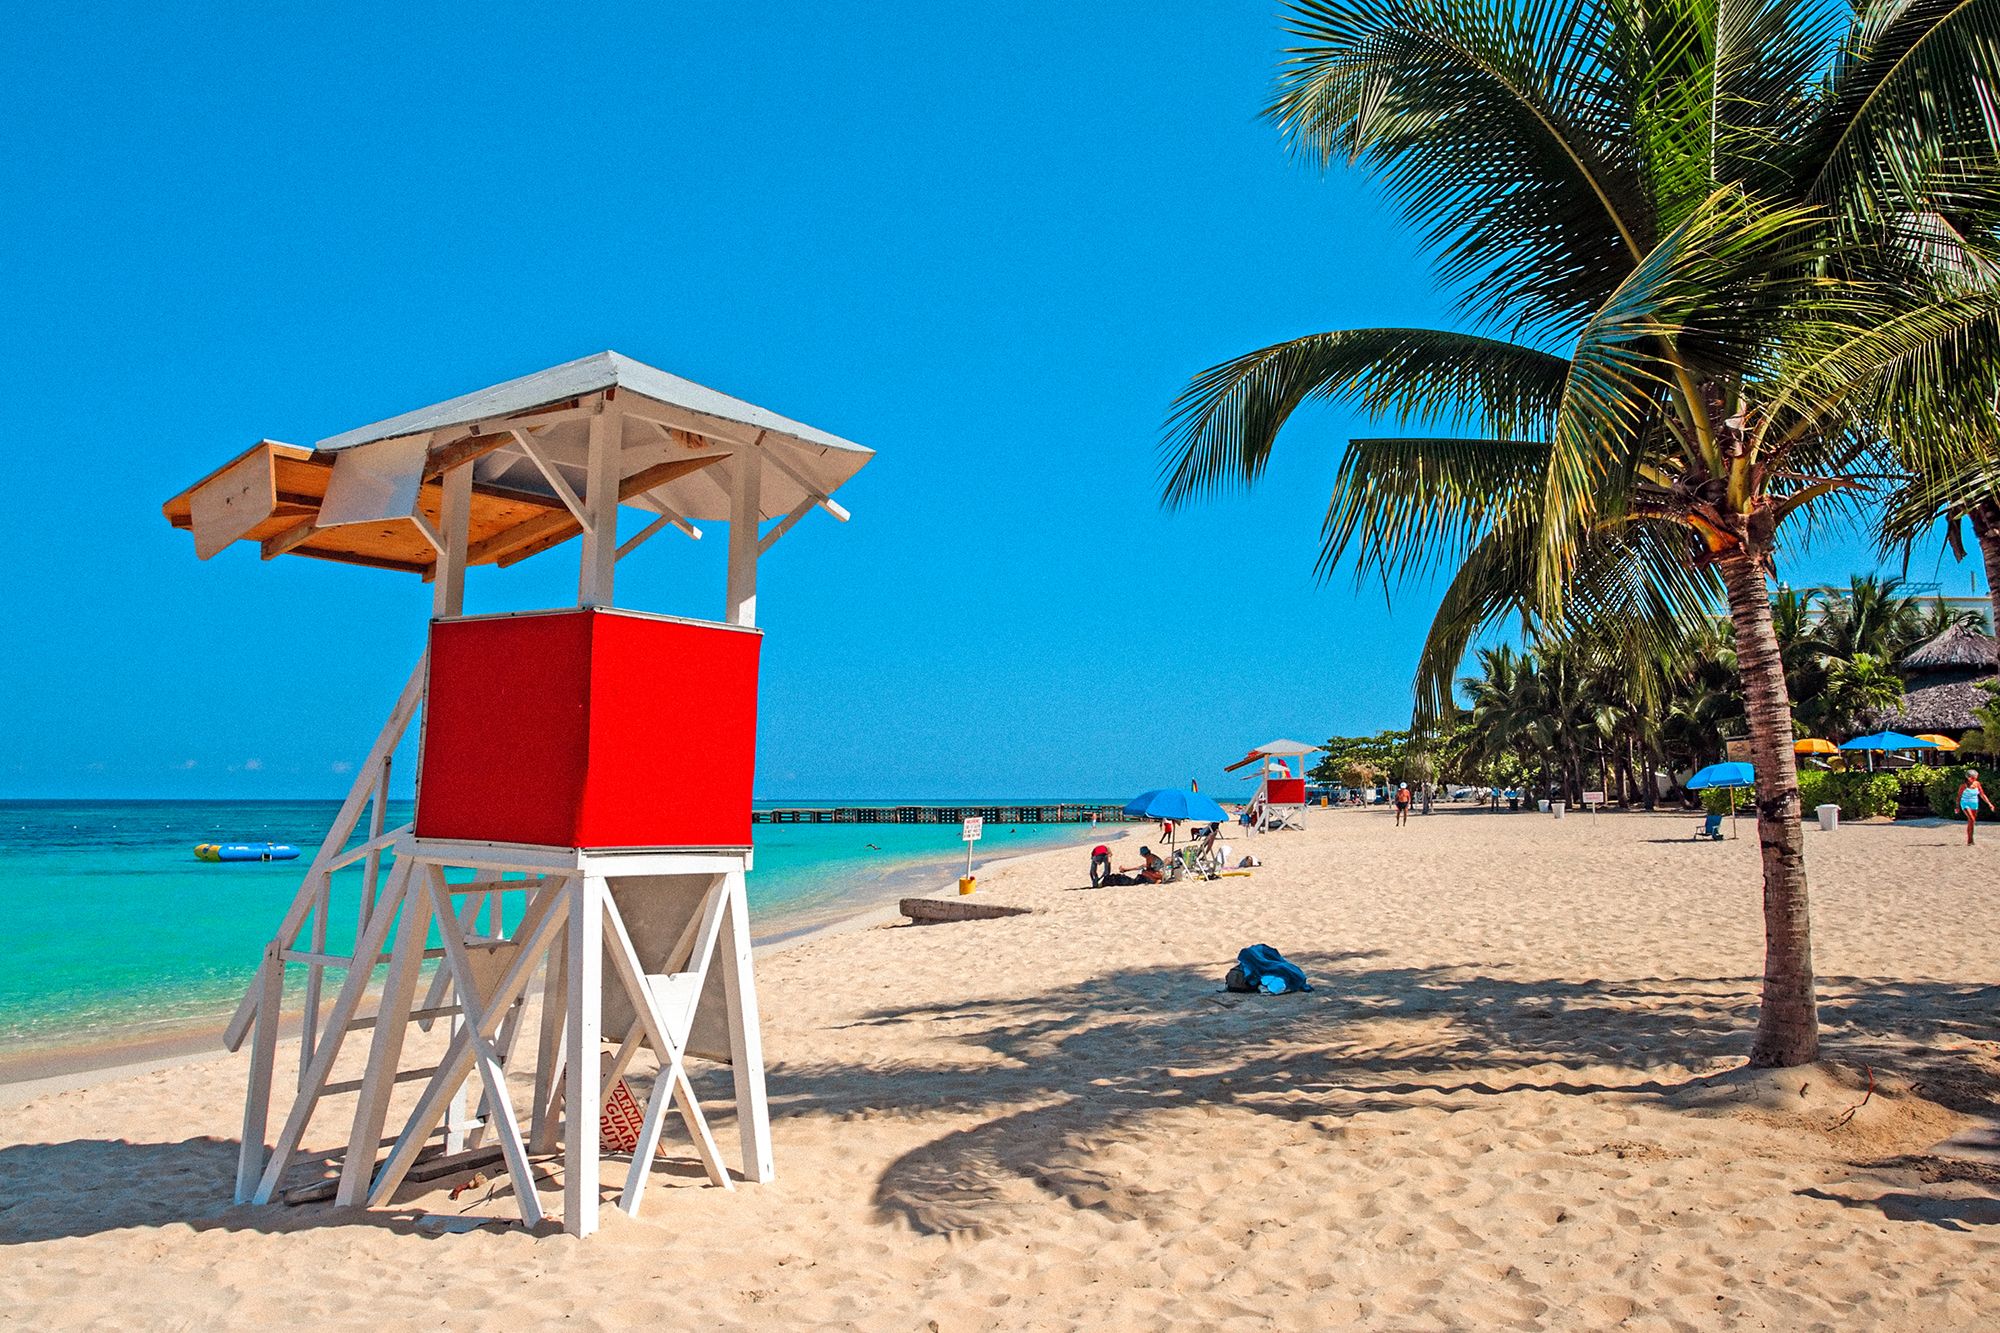 Doctor’s Cave Beach – A Dreamy Beach Destination In Montego Bay, Jamaica